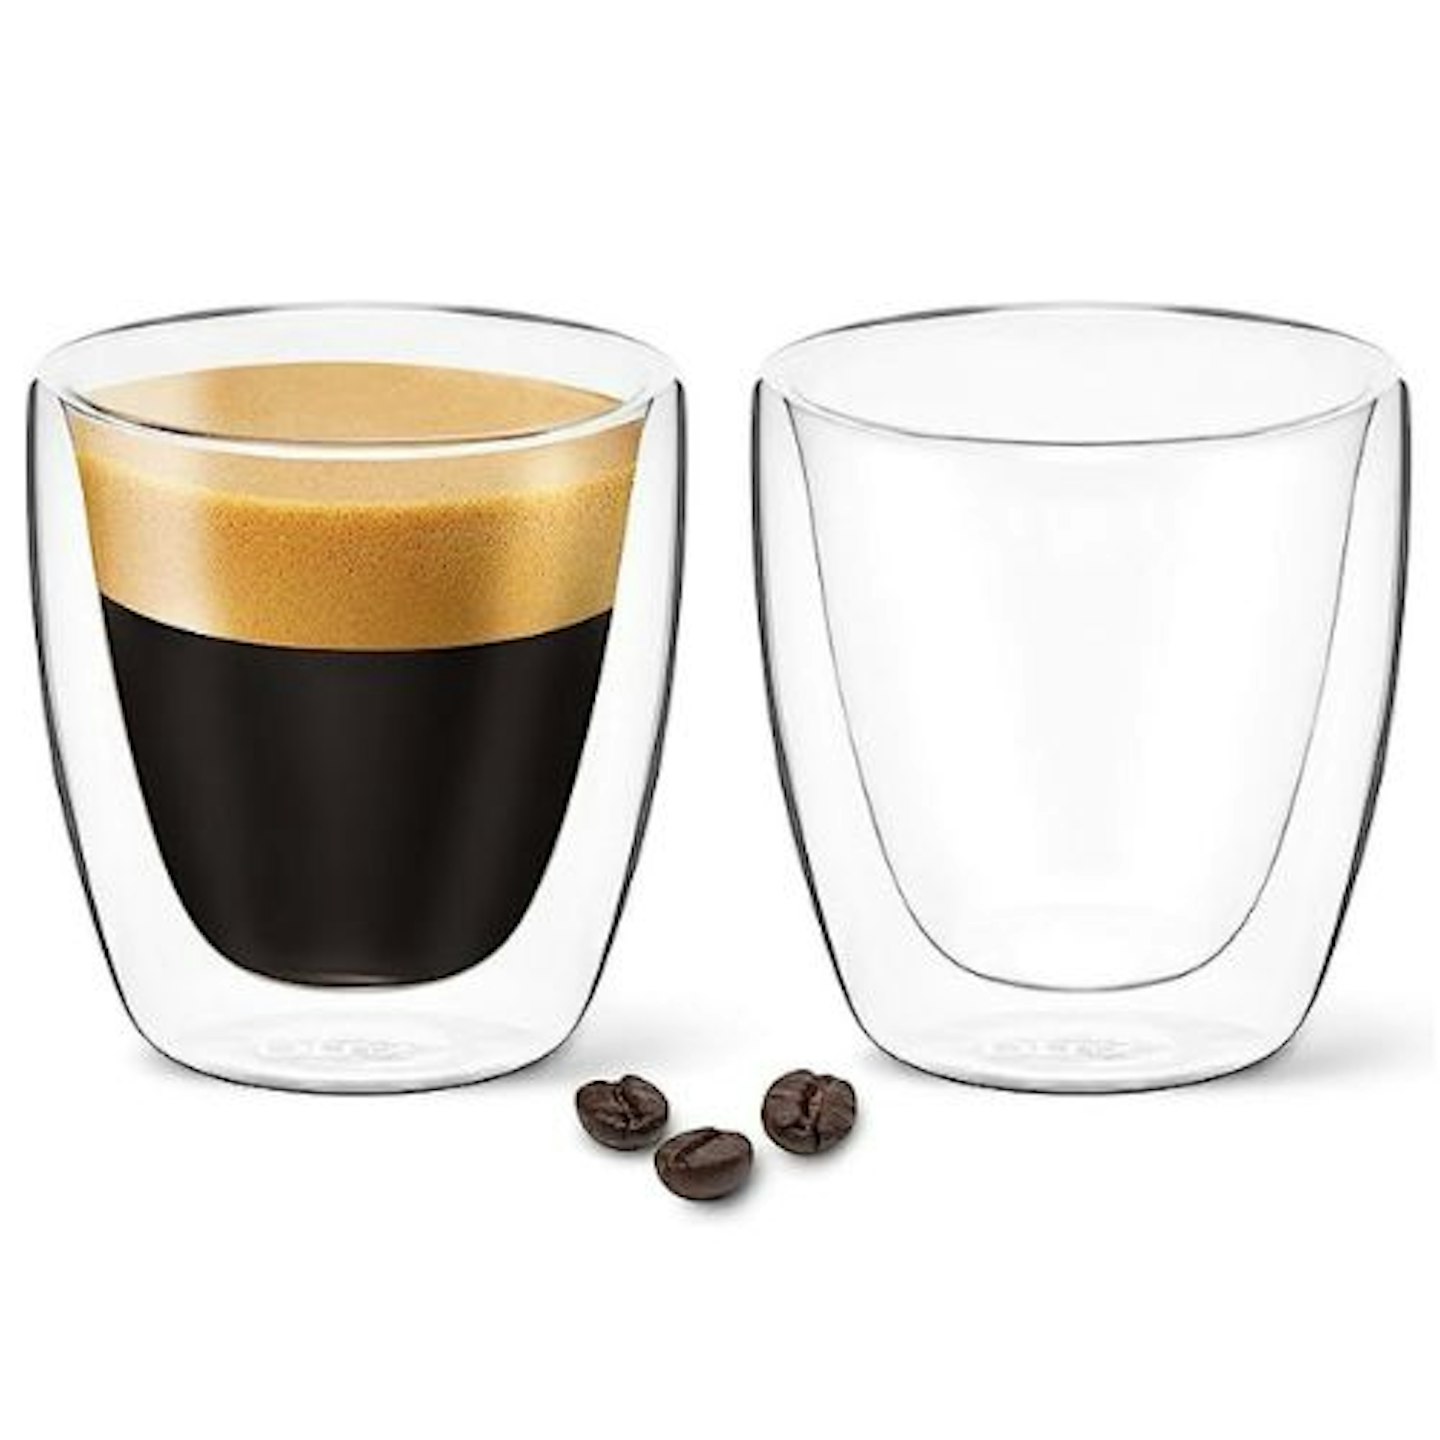 DLux Espresso Coffee Cups